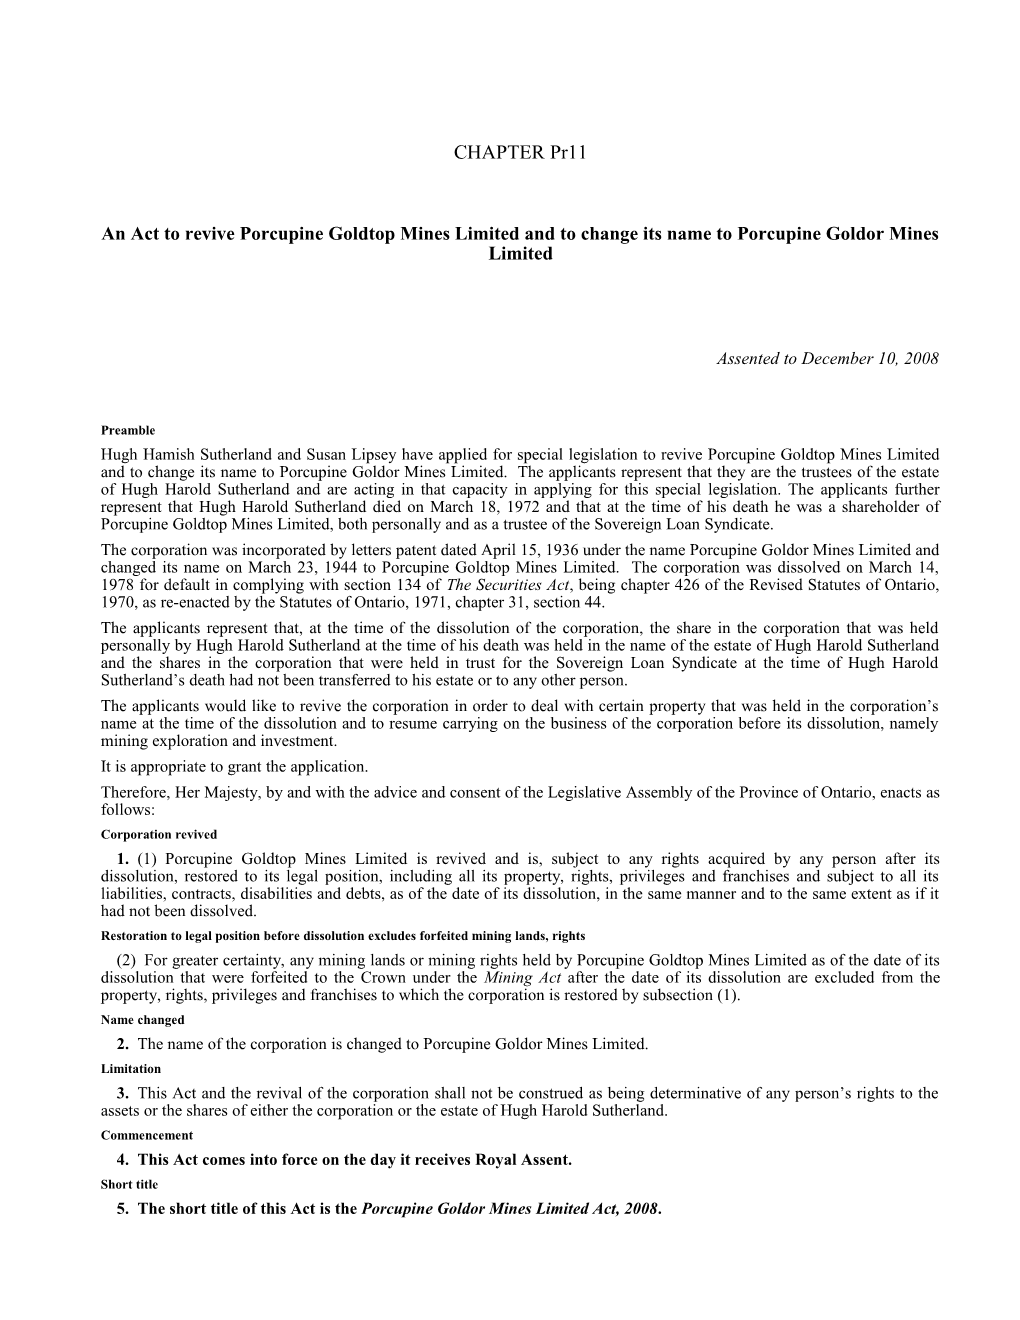 Porcupine Goldor Mines Limited Act, 2008, S.O. 2008, C. Pr11 - Bill Pr12